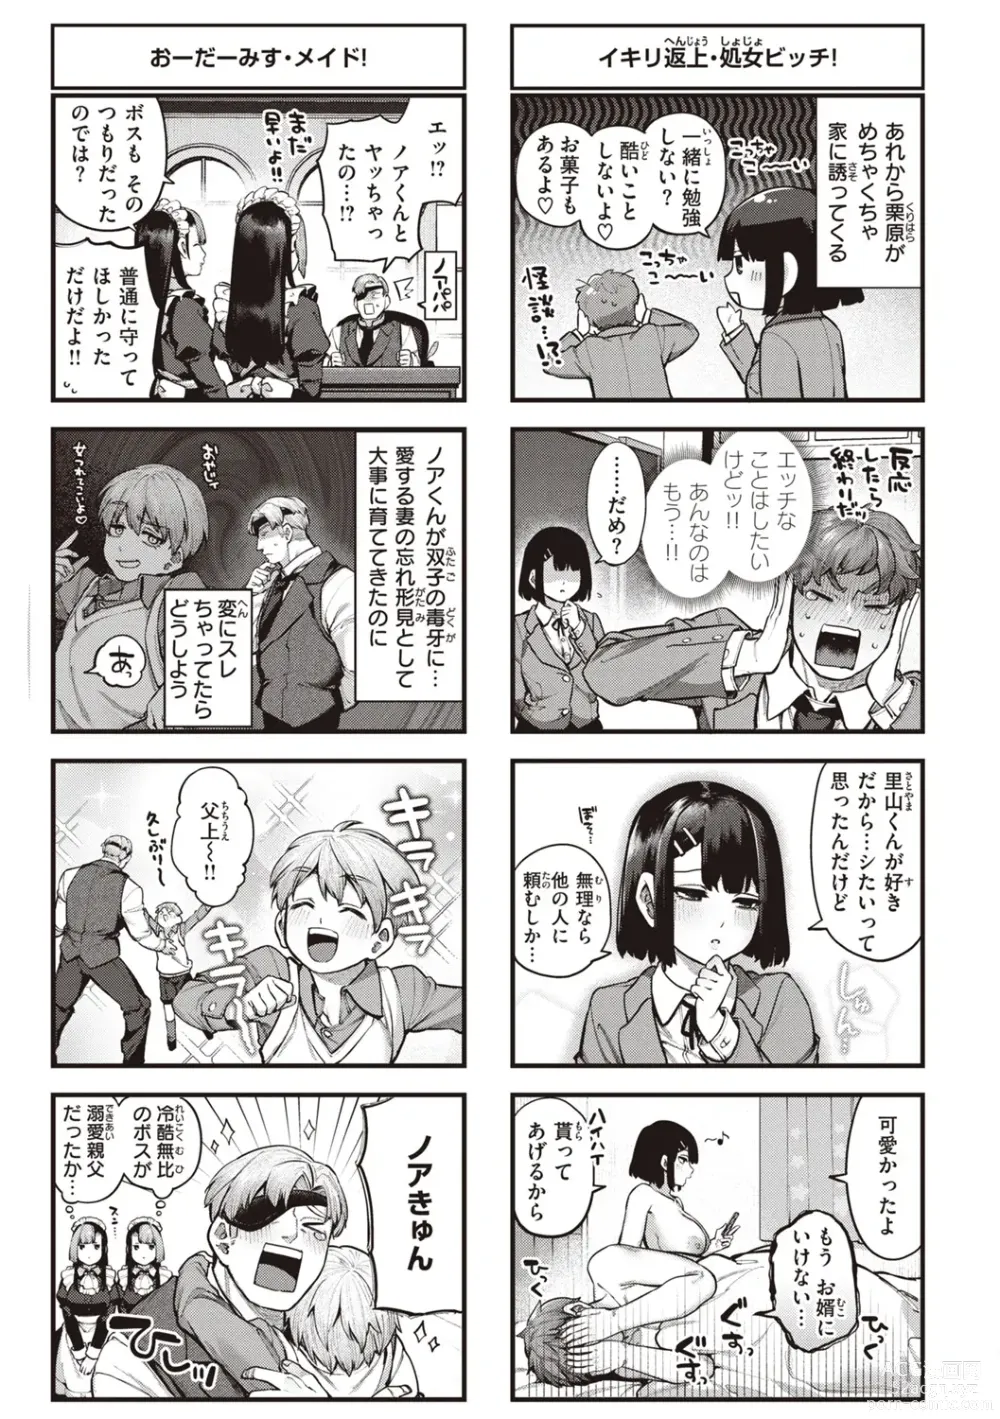 Page 175 of manga DA-DA-MO-RE